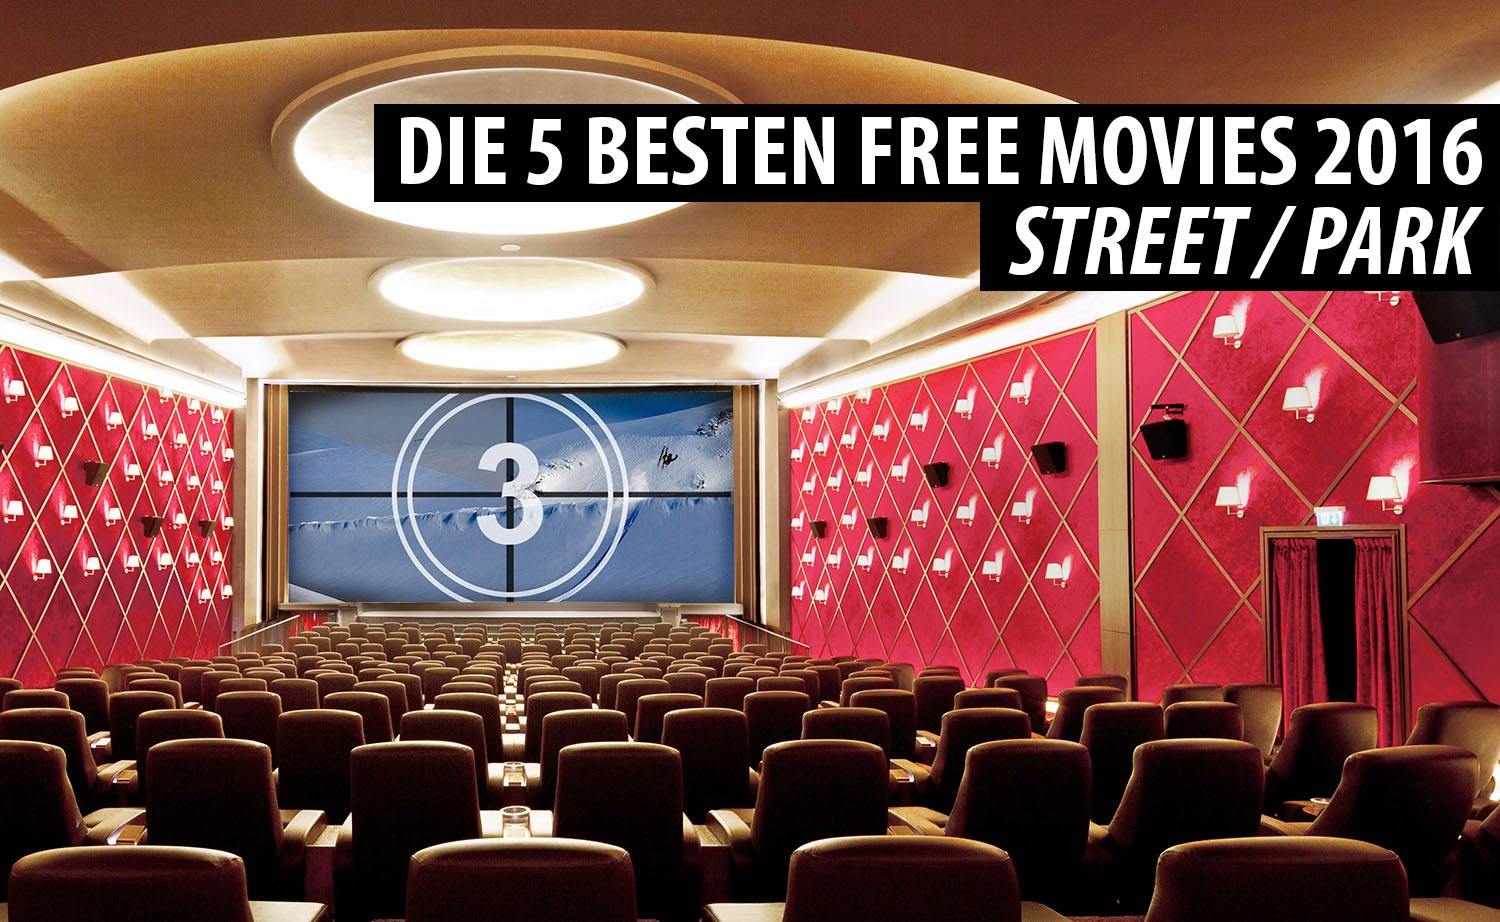 Die 5 besten Free Movies 2016 (Park/Street)